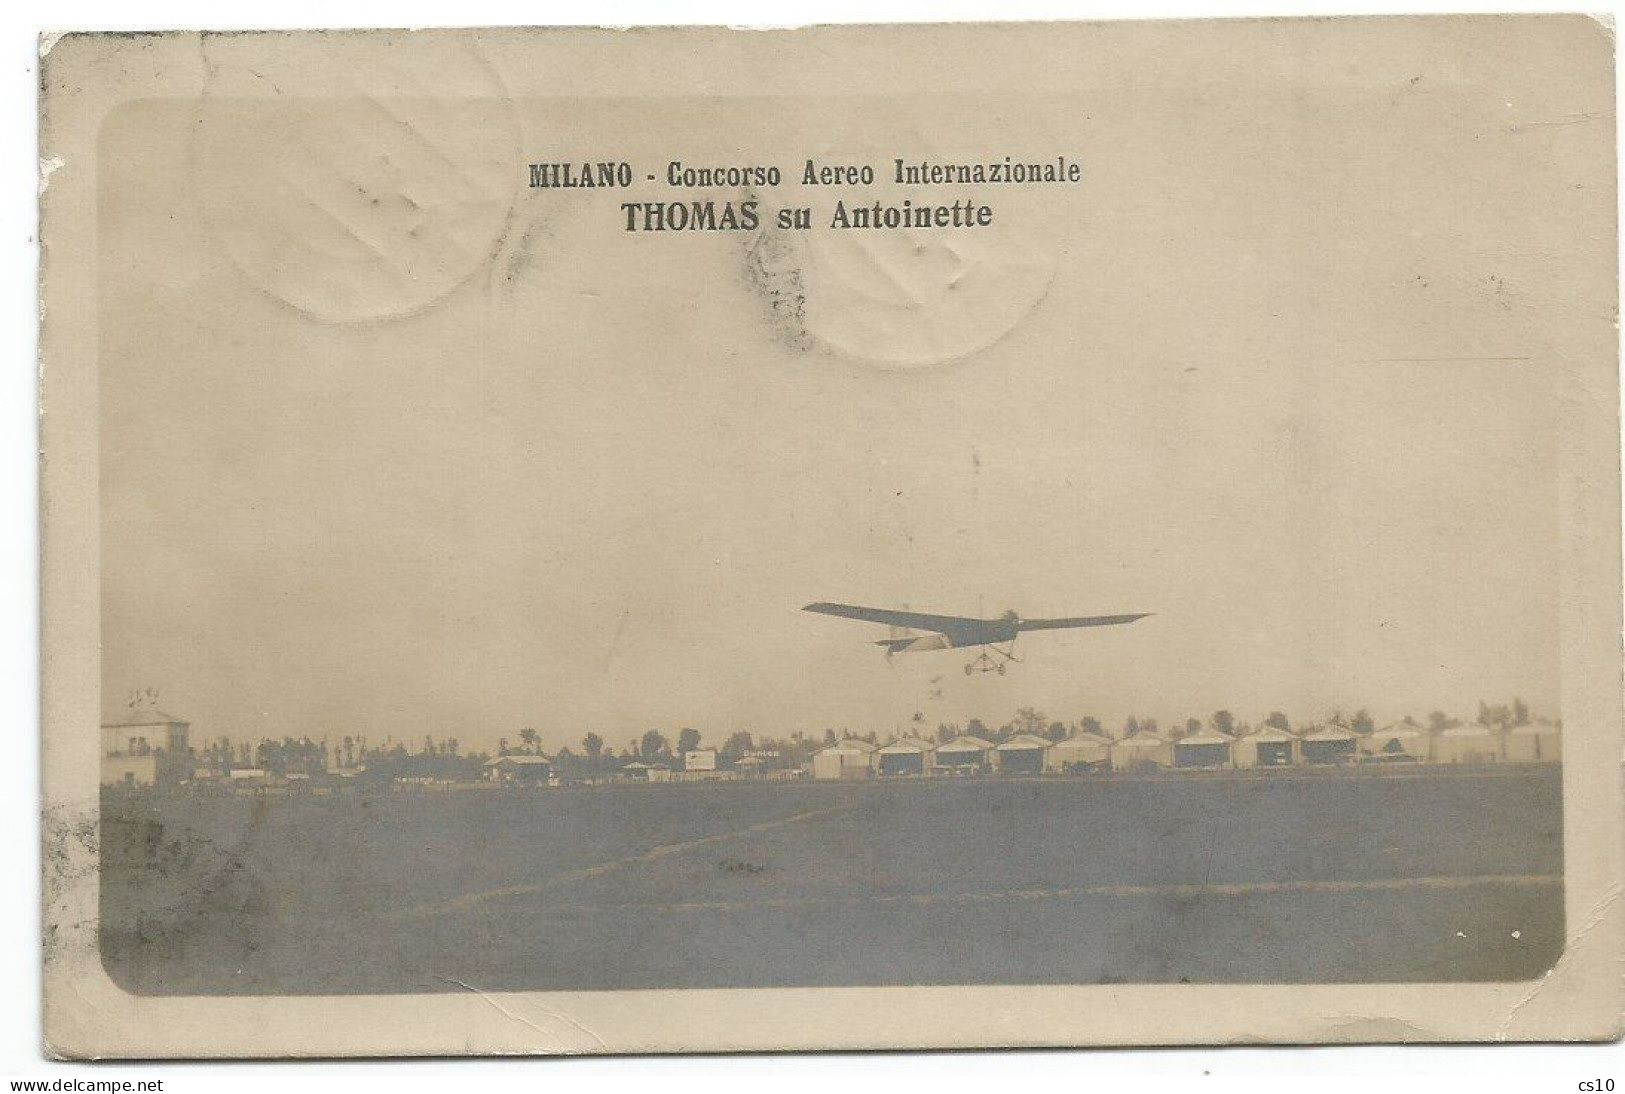 Precursori Posta Aerea Airmail Precursors Avion Precurseurs 1910 Milano Concorso Aereo Int. Aviatore Thomas / Antoinette - Poststempel (Flugzeuge)